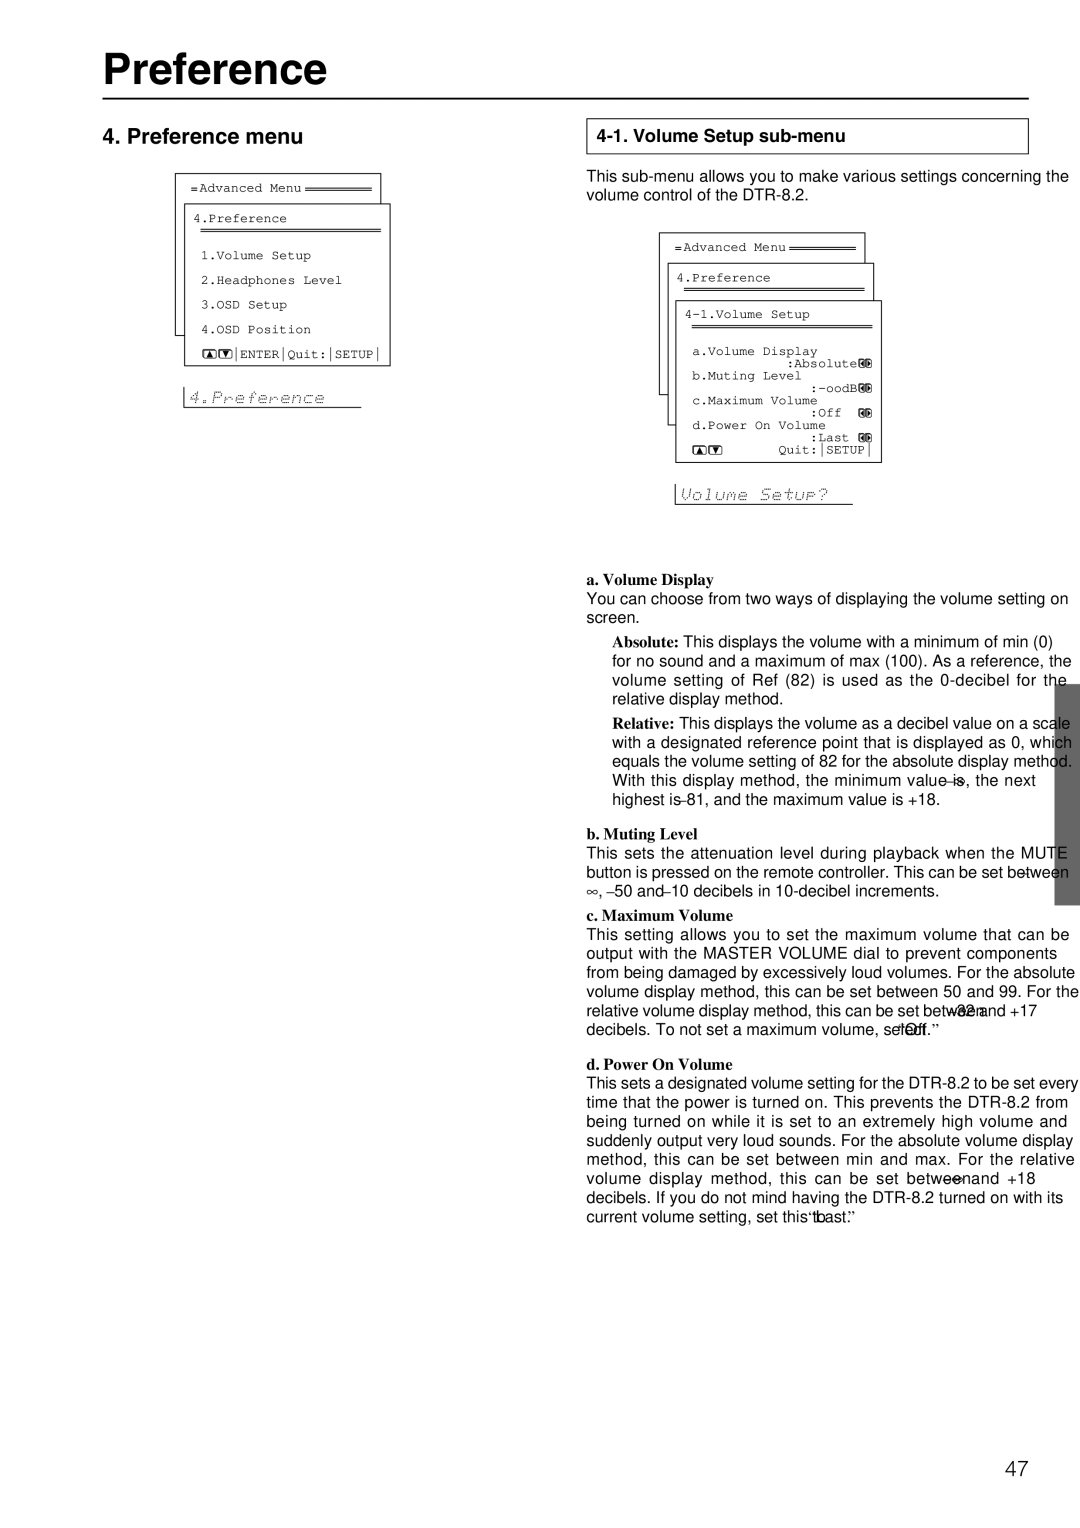 Integra DTR-8.2 instruction manual Preference menu, Volume Setup sub-menu 